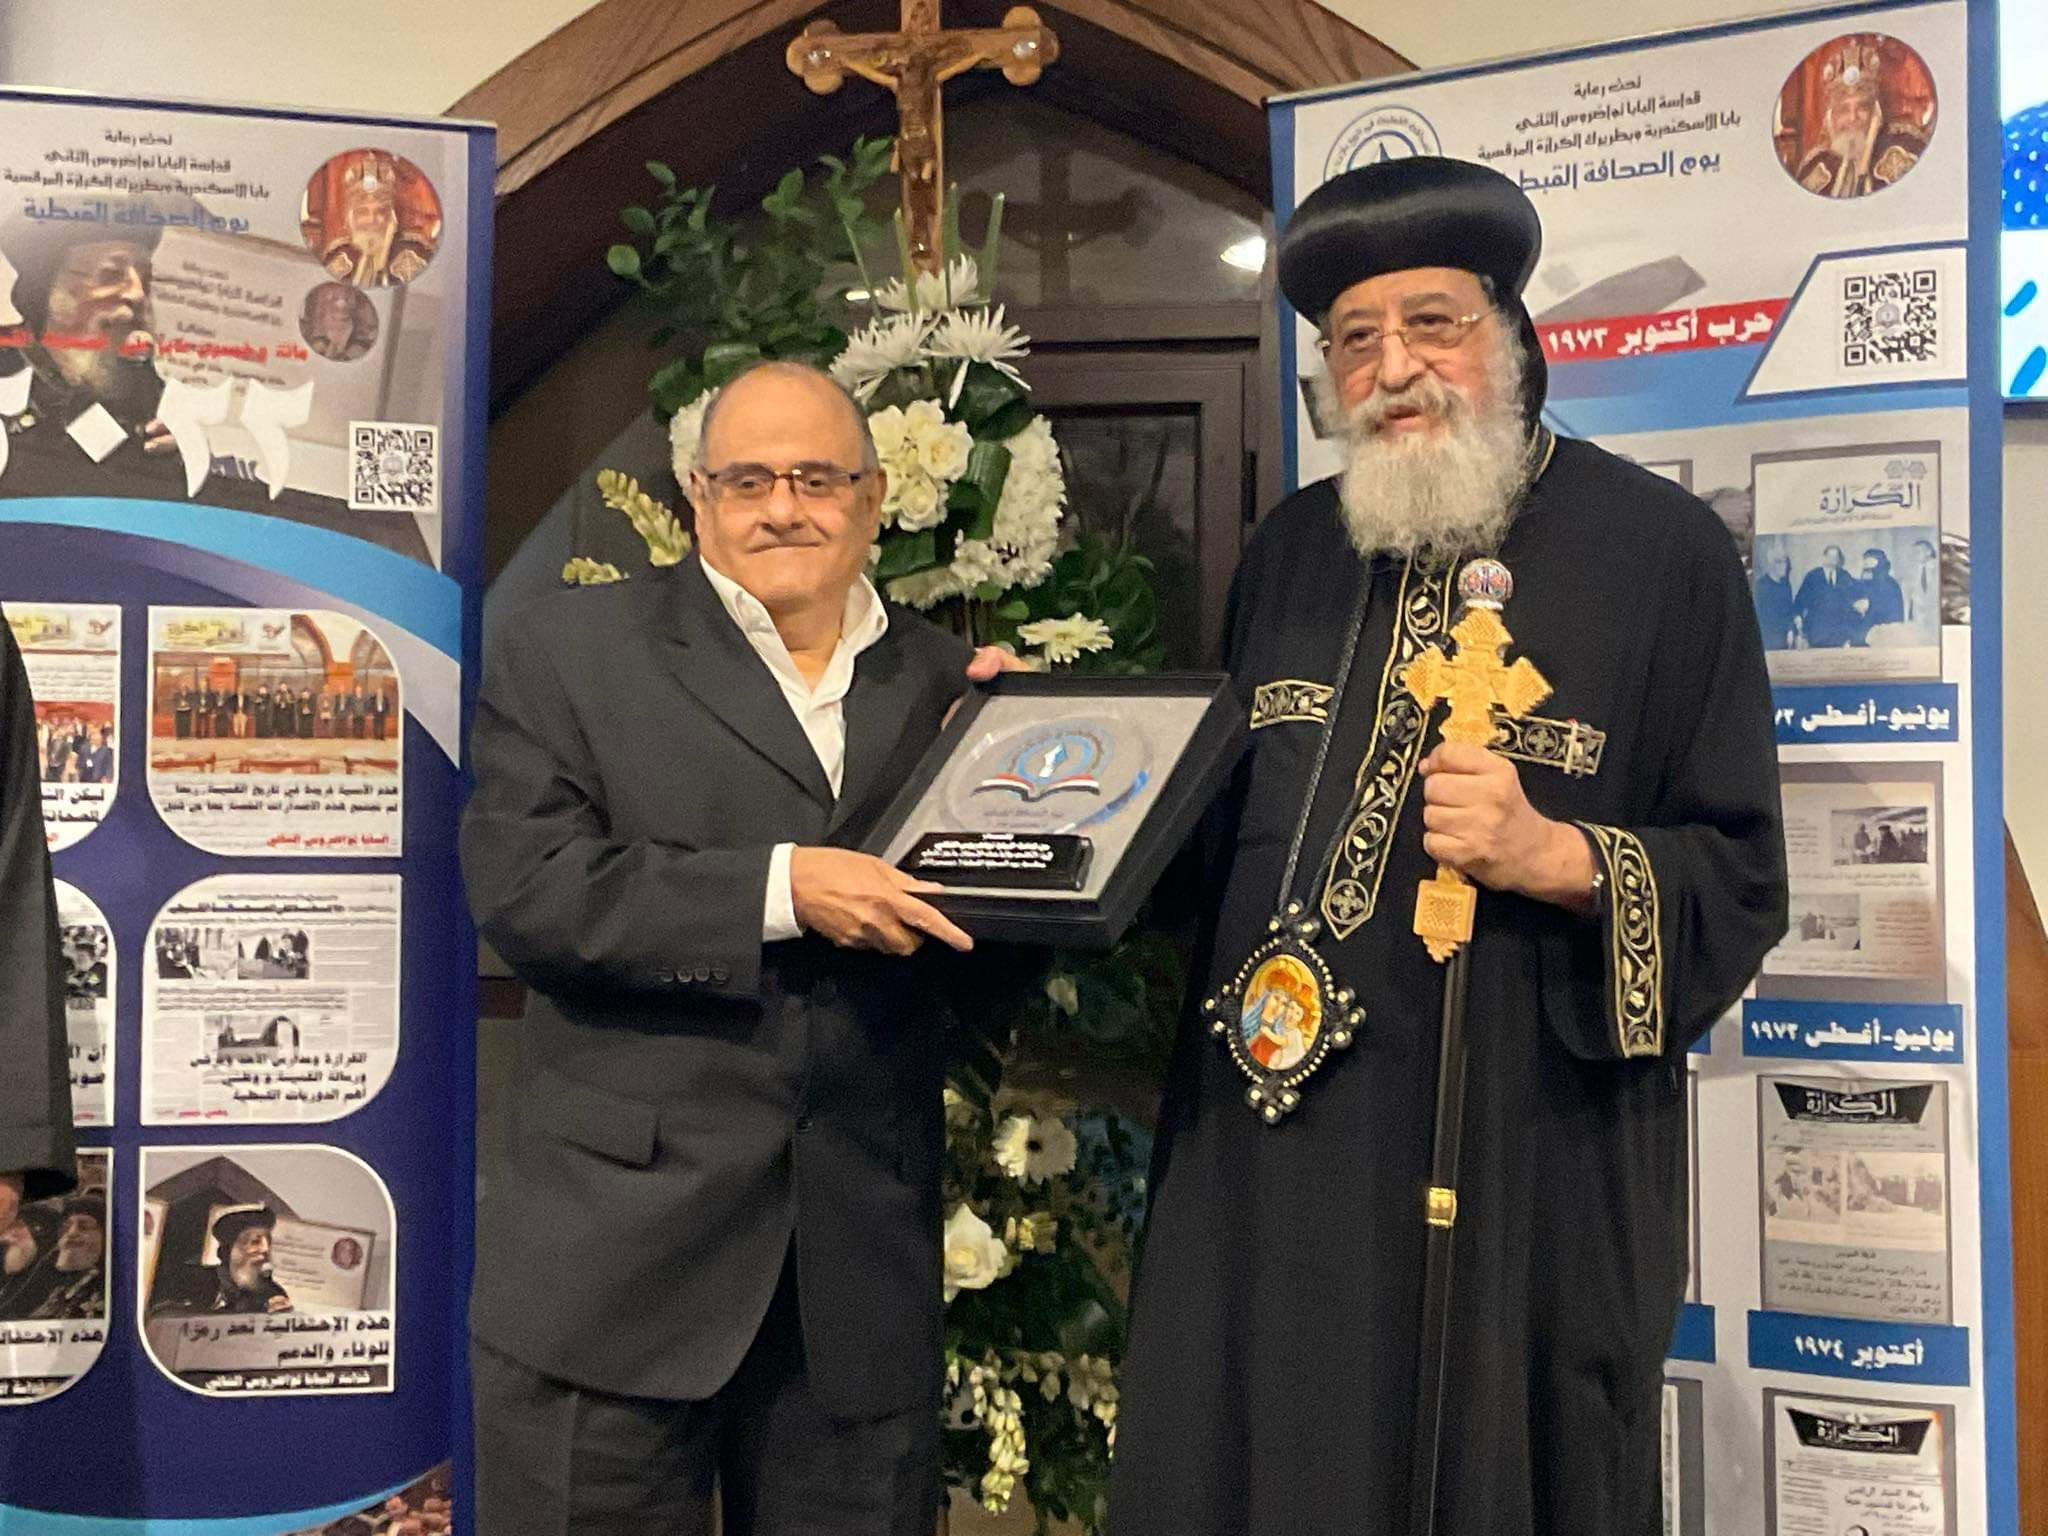 Celebrating Coptic Press a second time